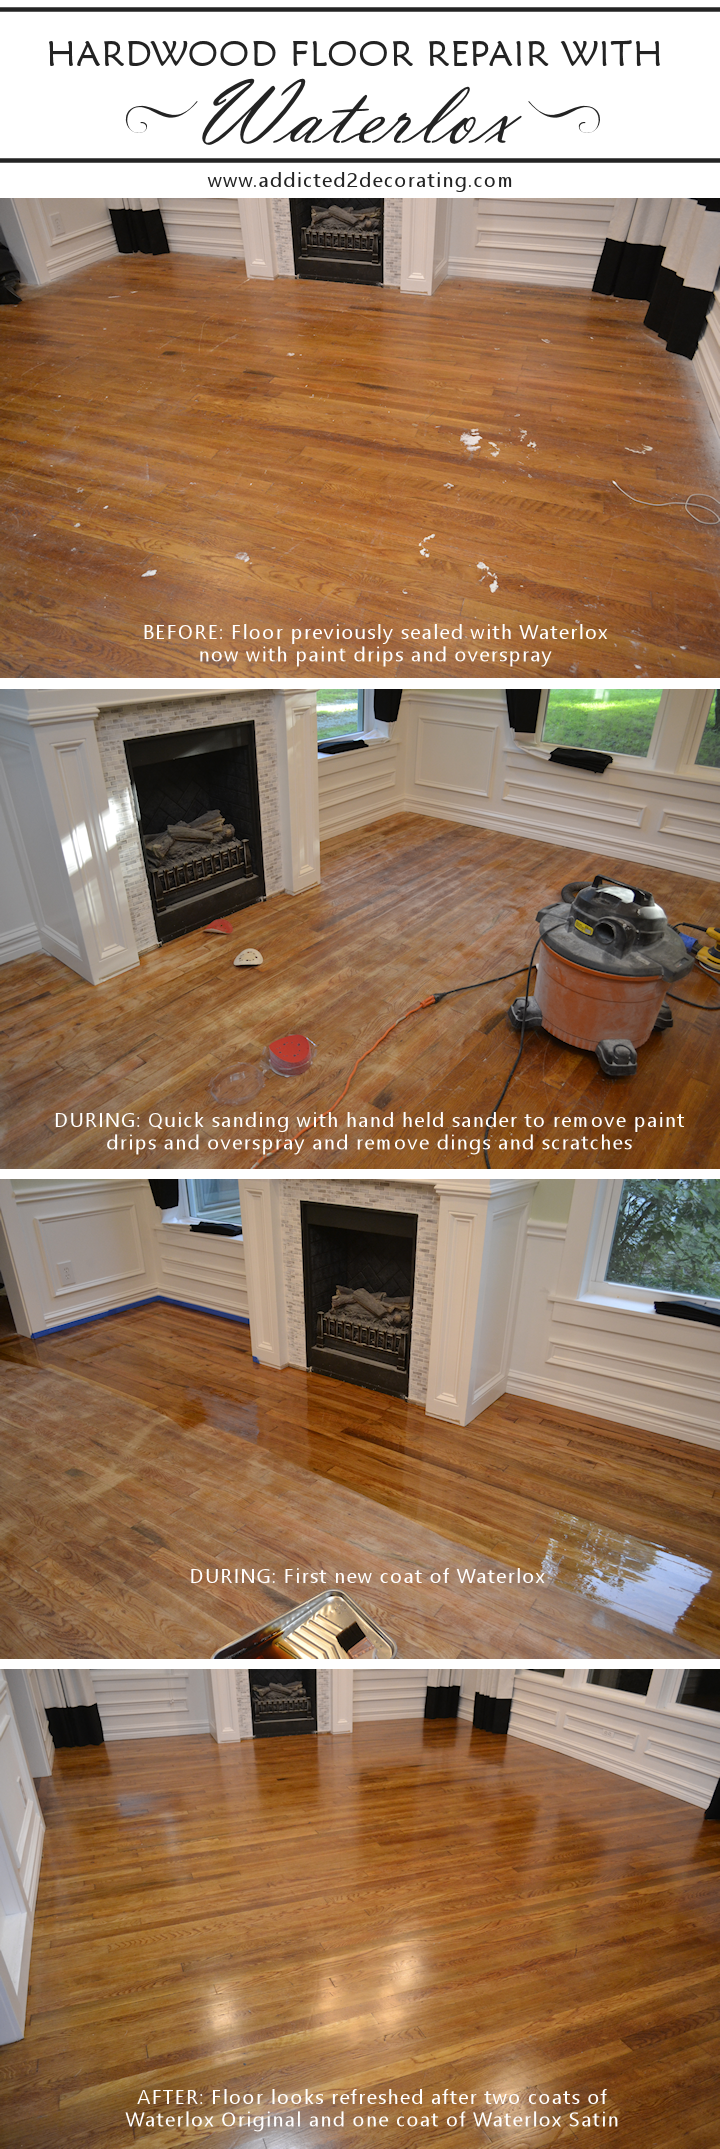 Recoating hardwood floors with Waterlox